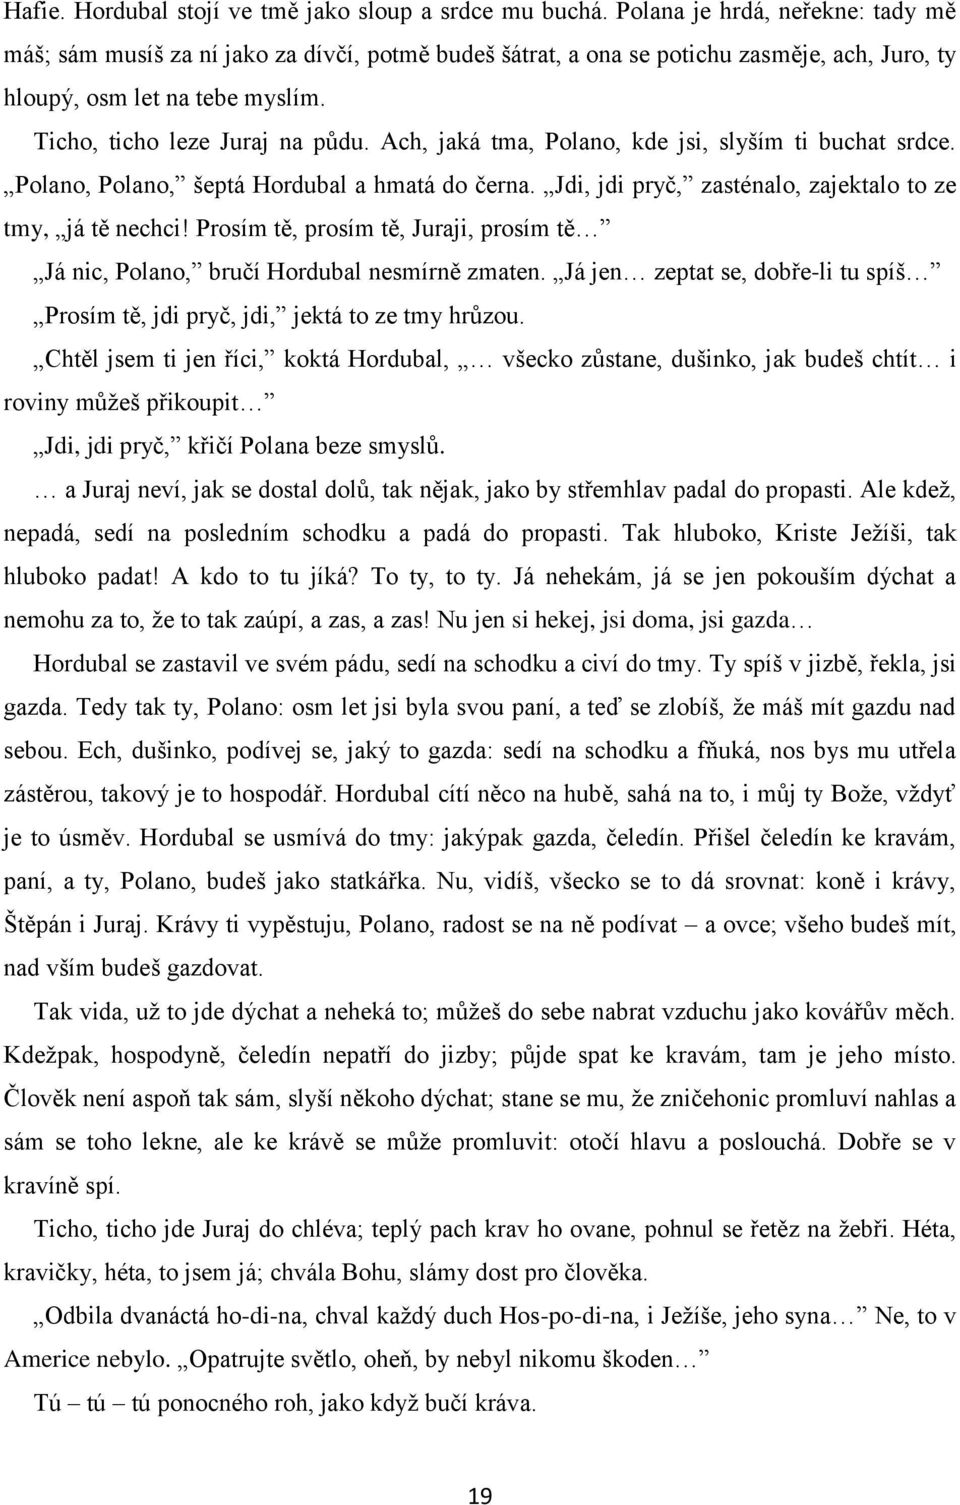 KAREL ČAPEK HORDUBAL 1 - PDF Stažení zdarma